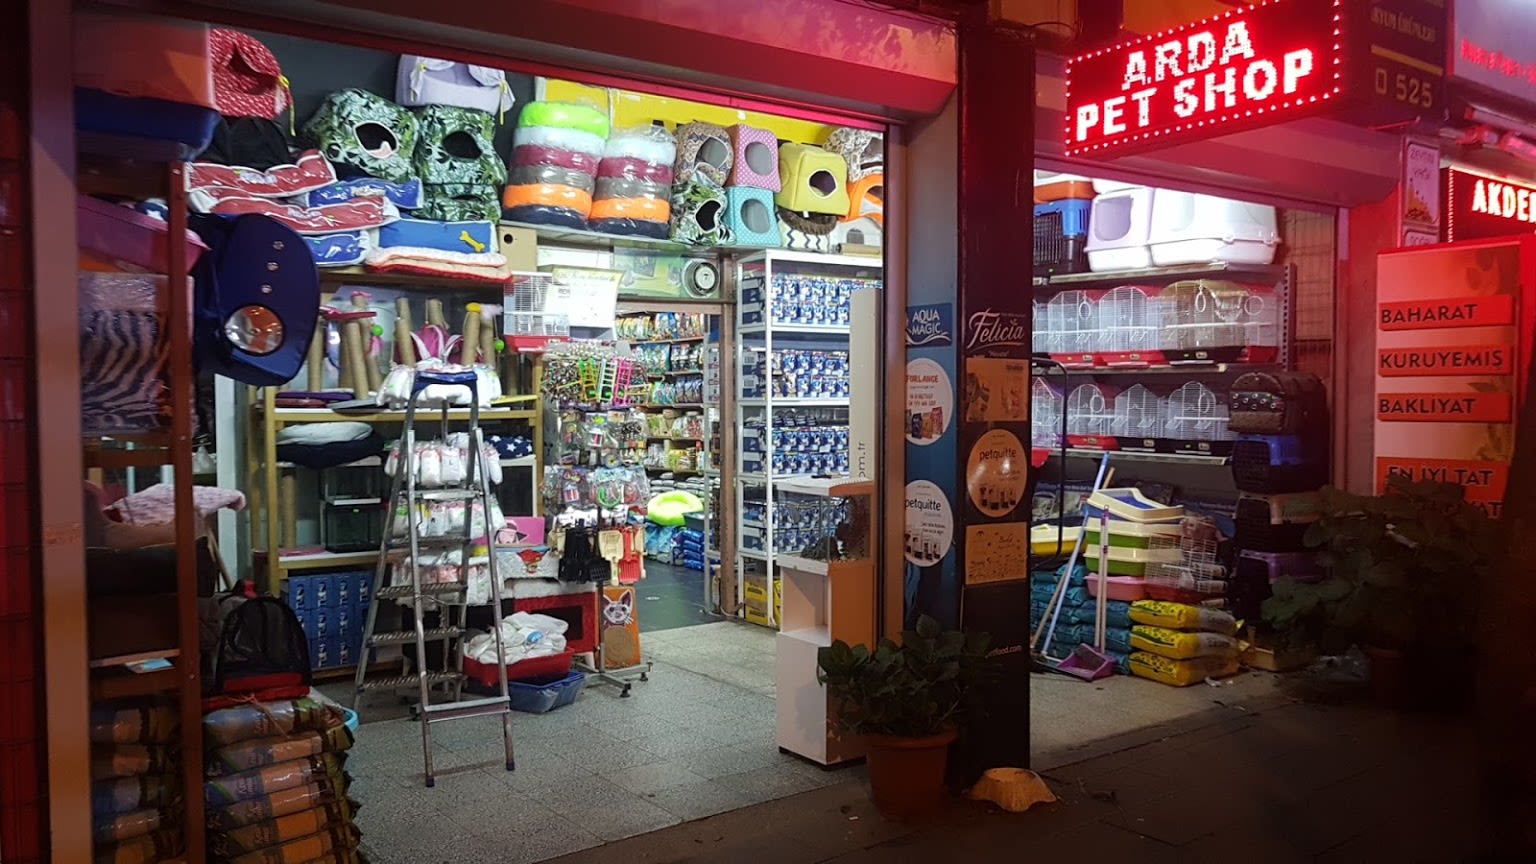 Arda Pet Shop